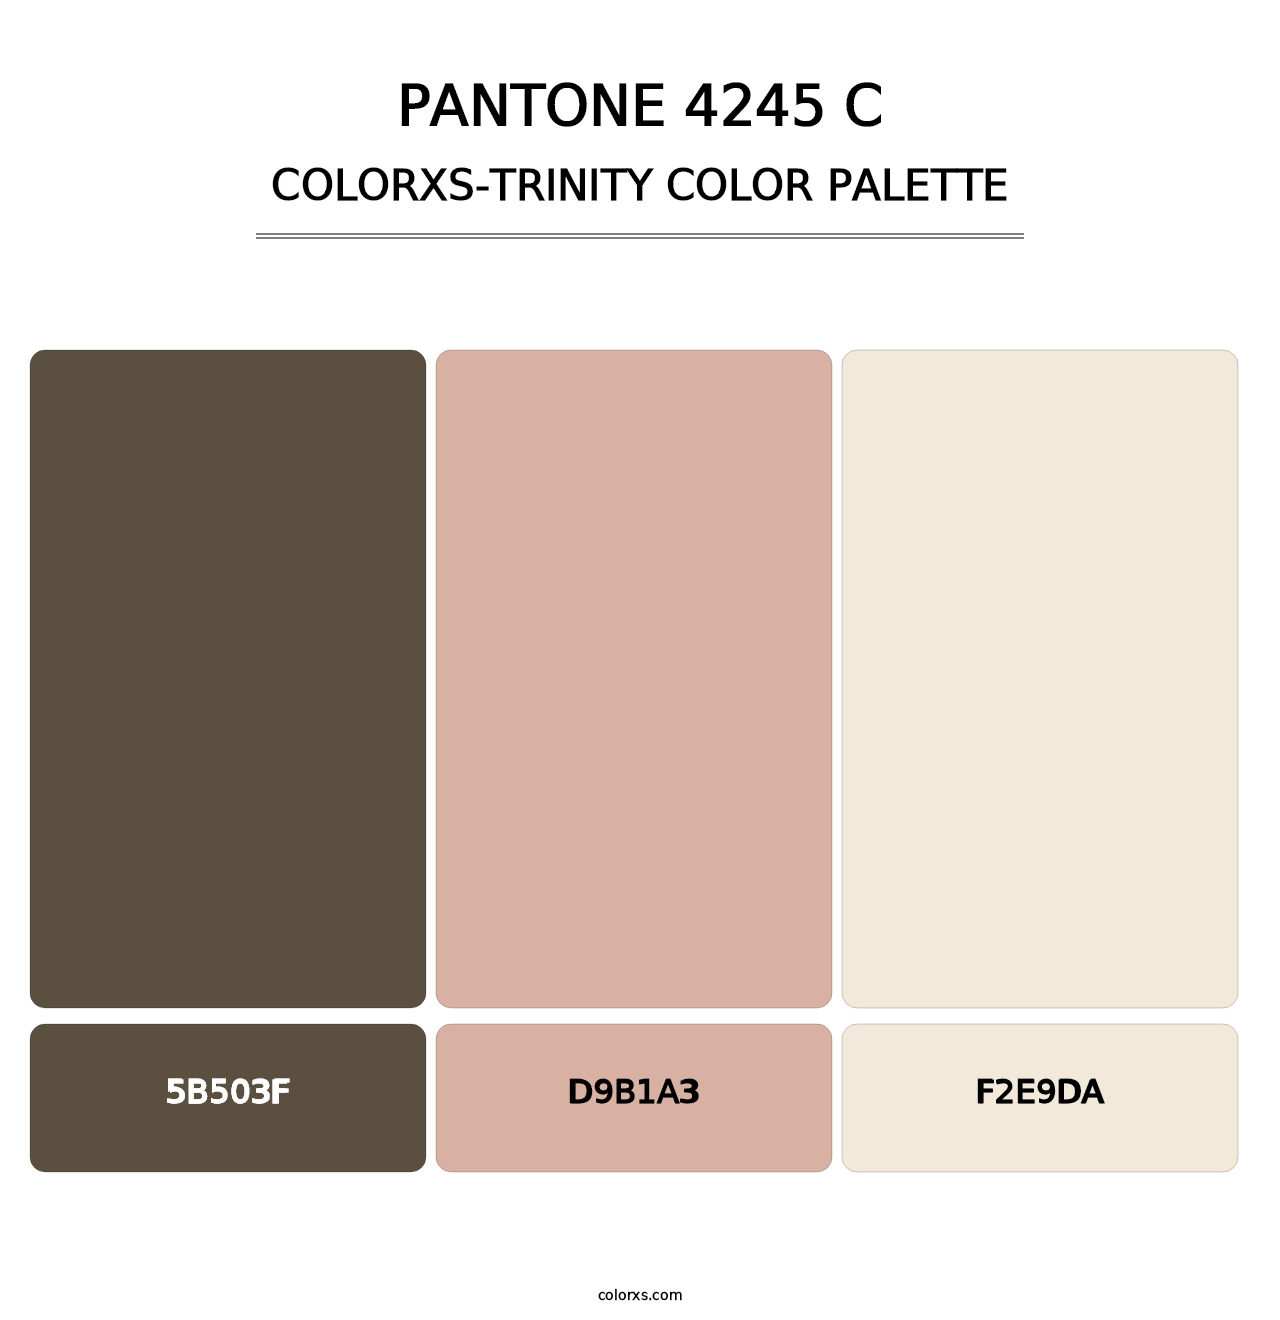 PANTONE 4245 C - Colorxs Trinity Palette